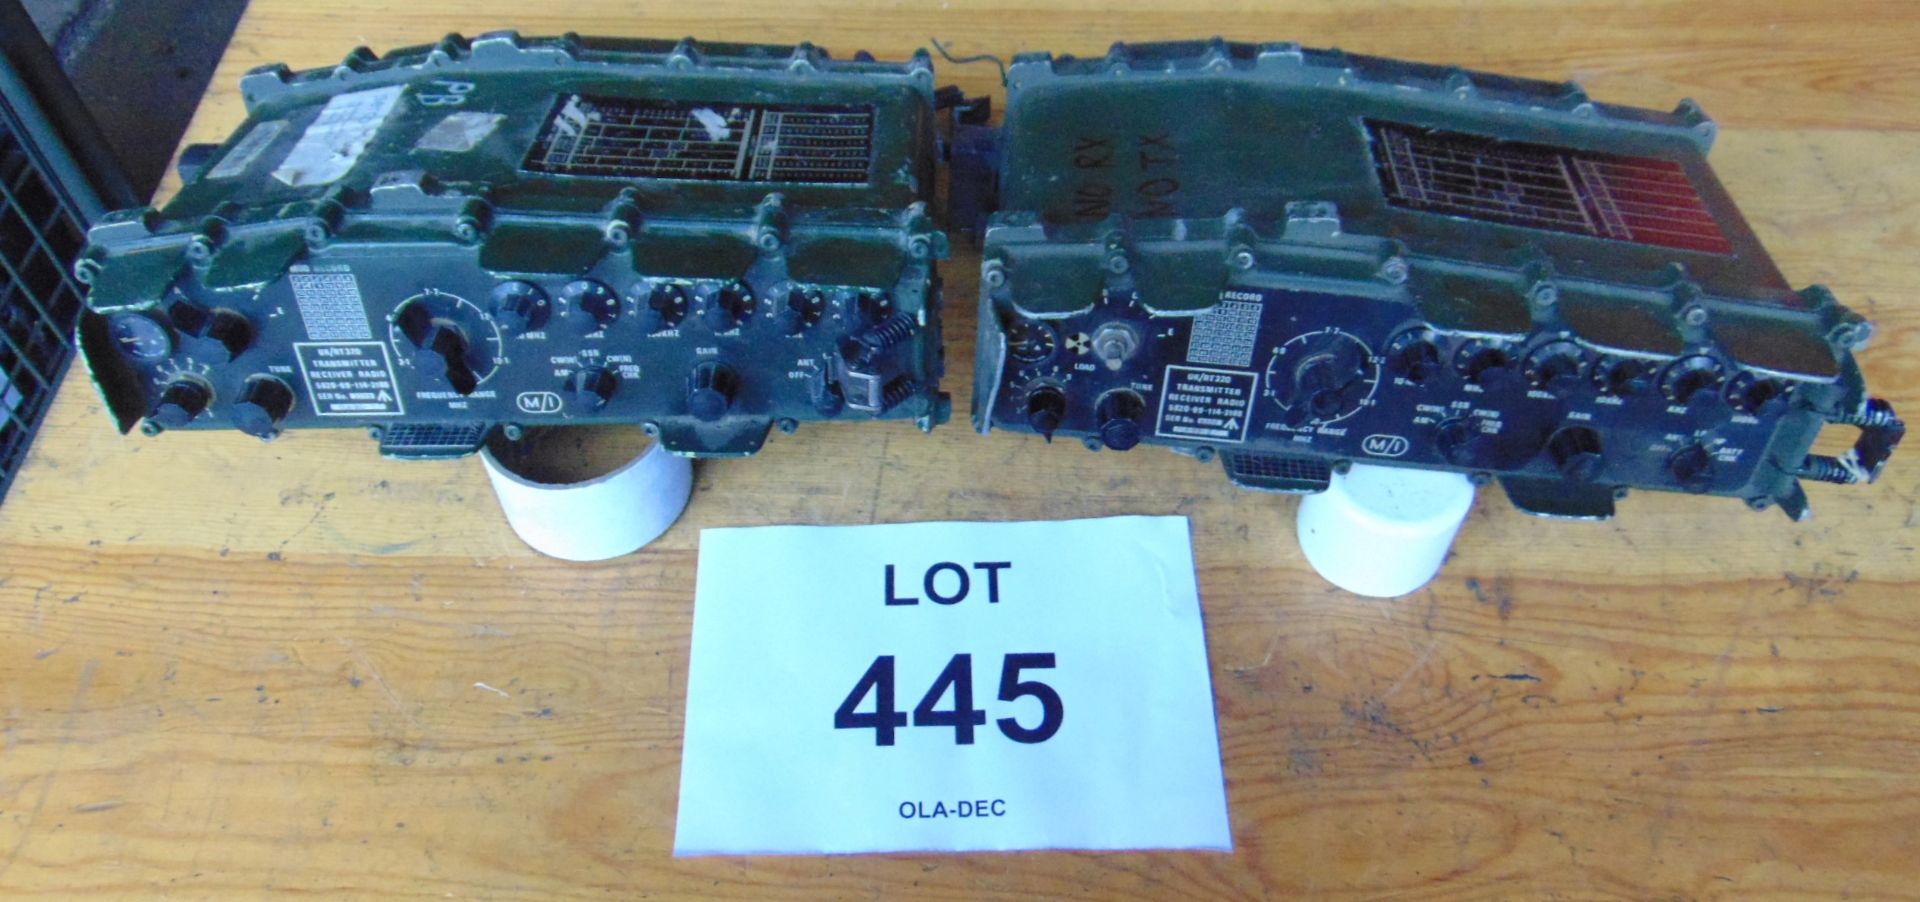 2 x Clansman UKRT 320 HF Transmitter Receivers